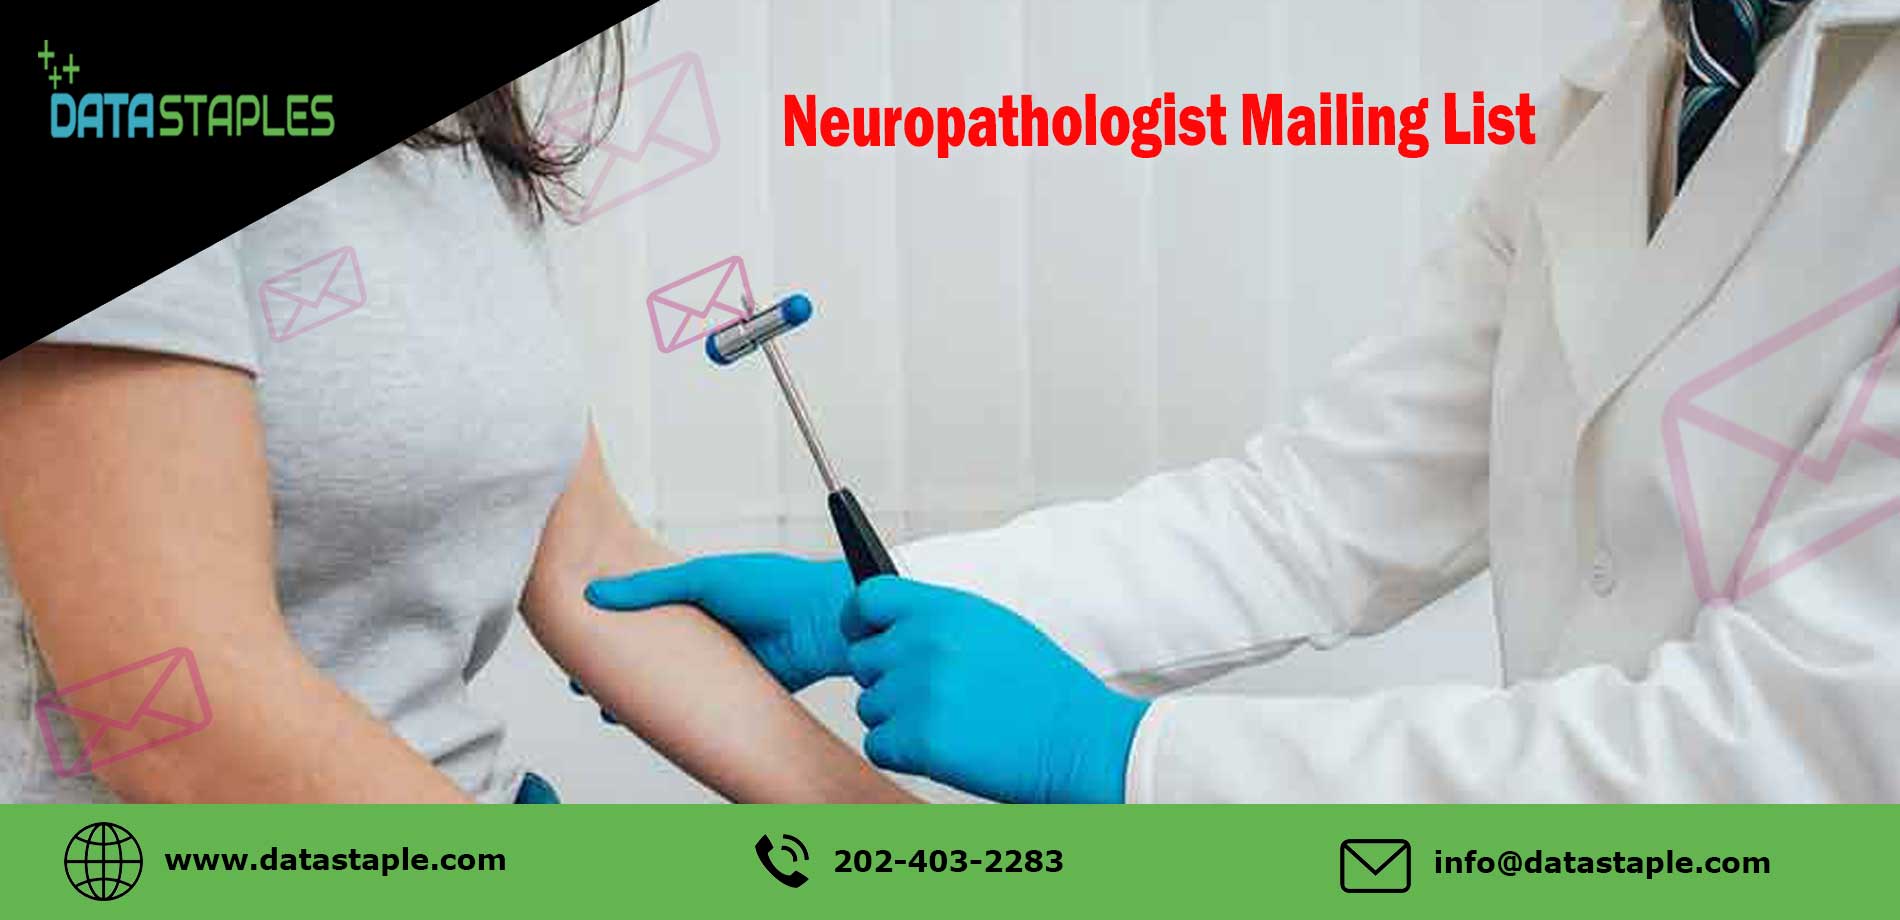 Neuropathologist Mailing List | DataStaples